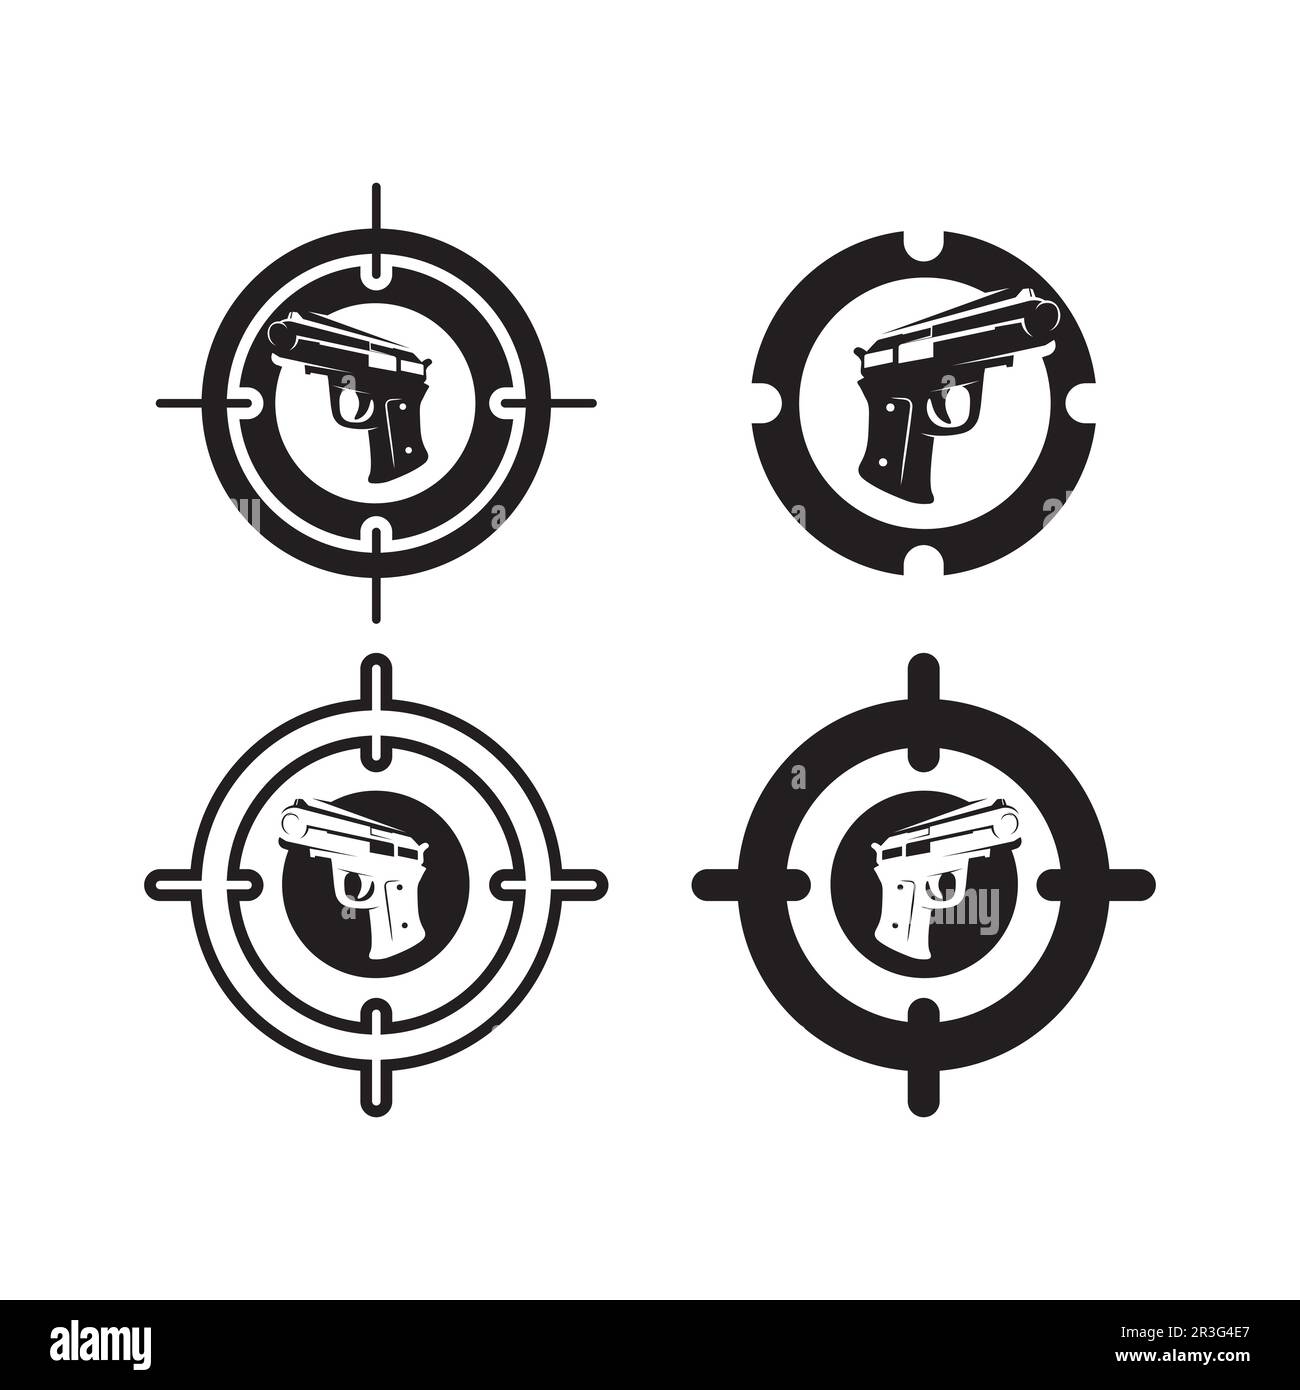 Logo de canon et fusil de sniper de soldat de l'Armée de terre vecteur de tir Design Illustration militaire revolver de tir Illustration de Vecteur